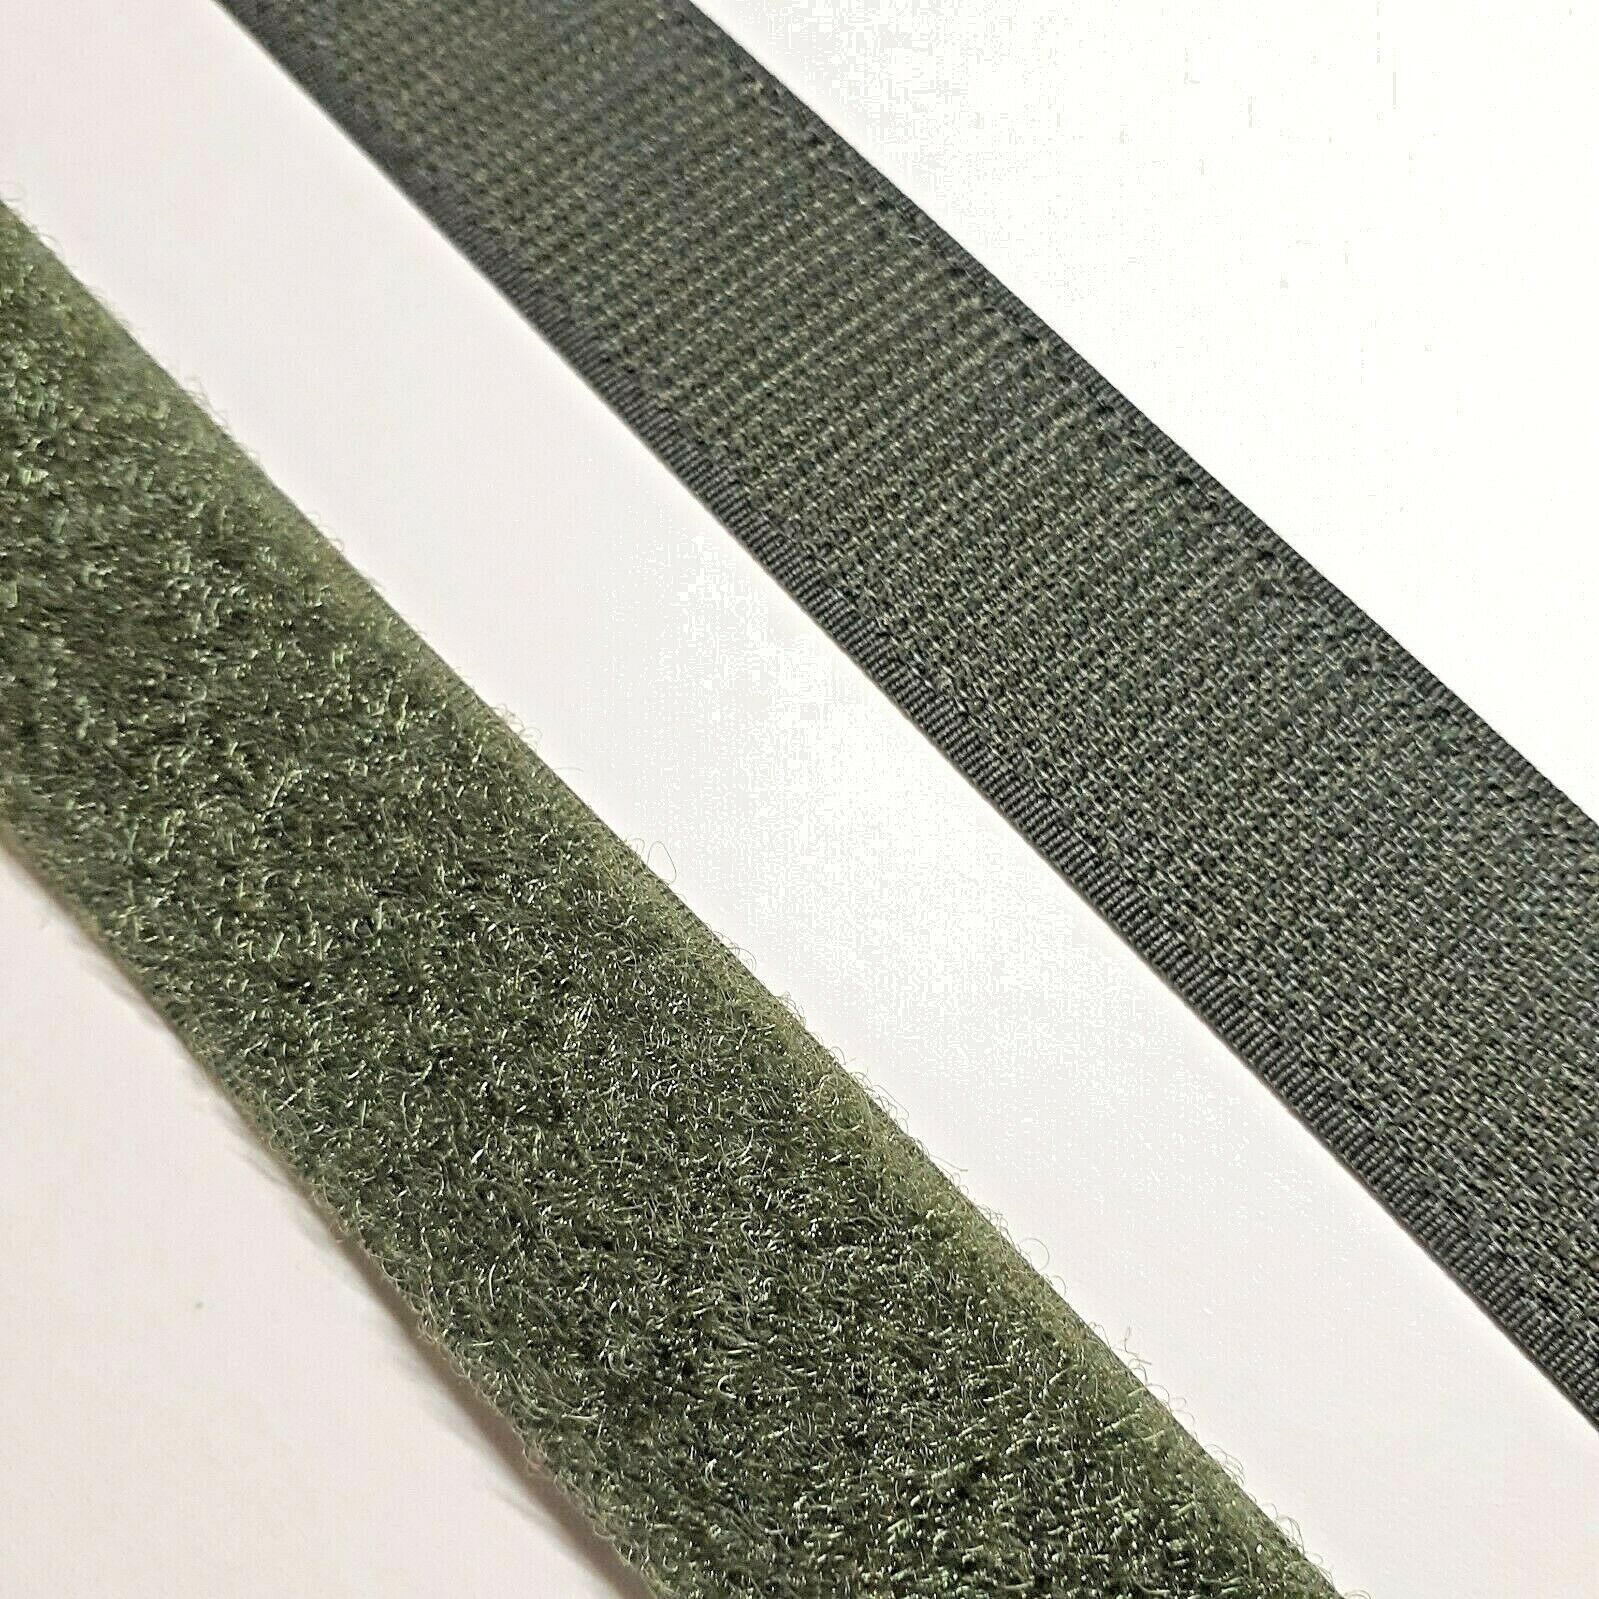 1" Velcro® Brand Hook And Loop Set - Mil-spec Green Sew-on Type Strip 1" X 36"